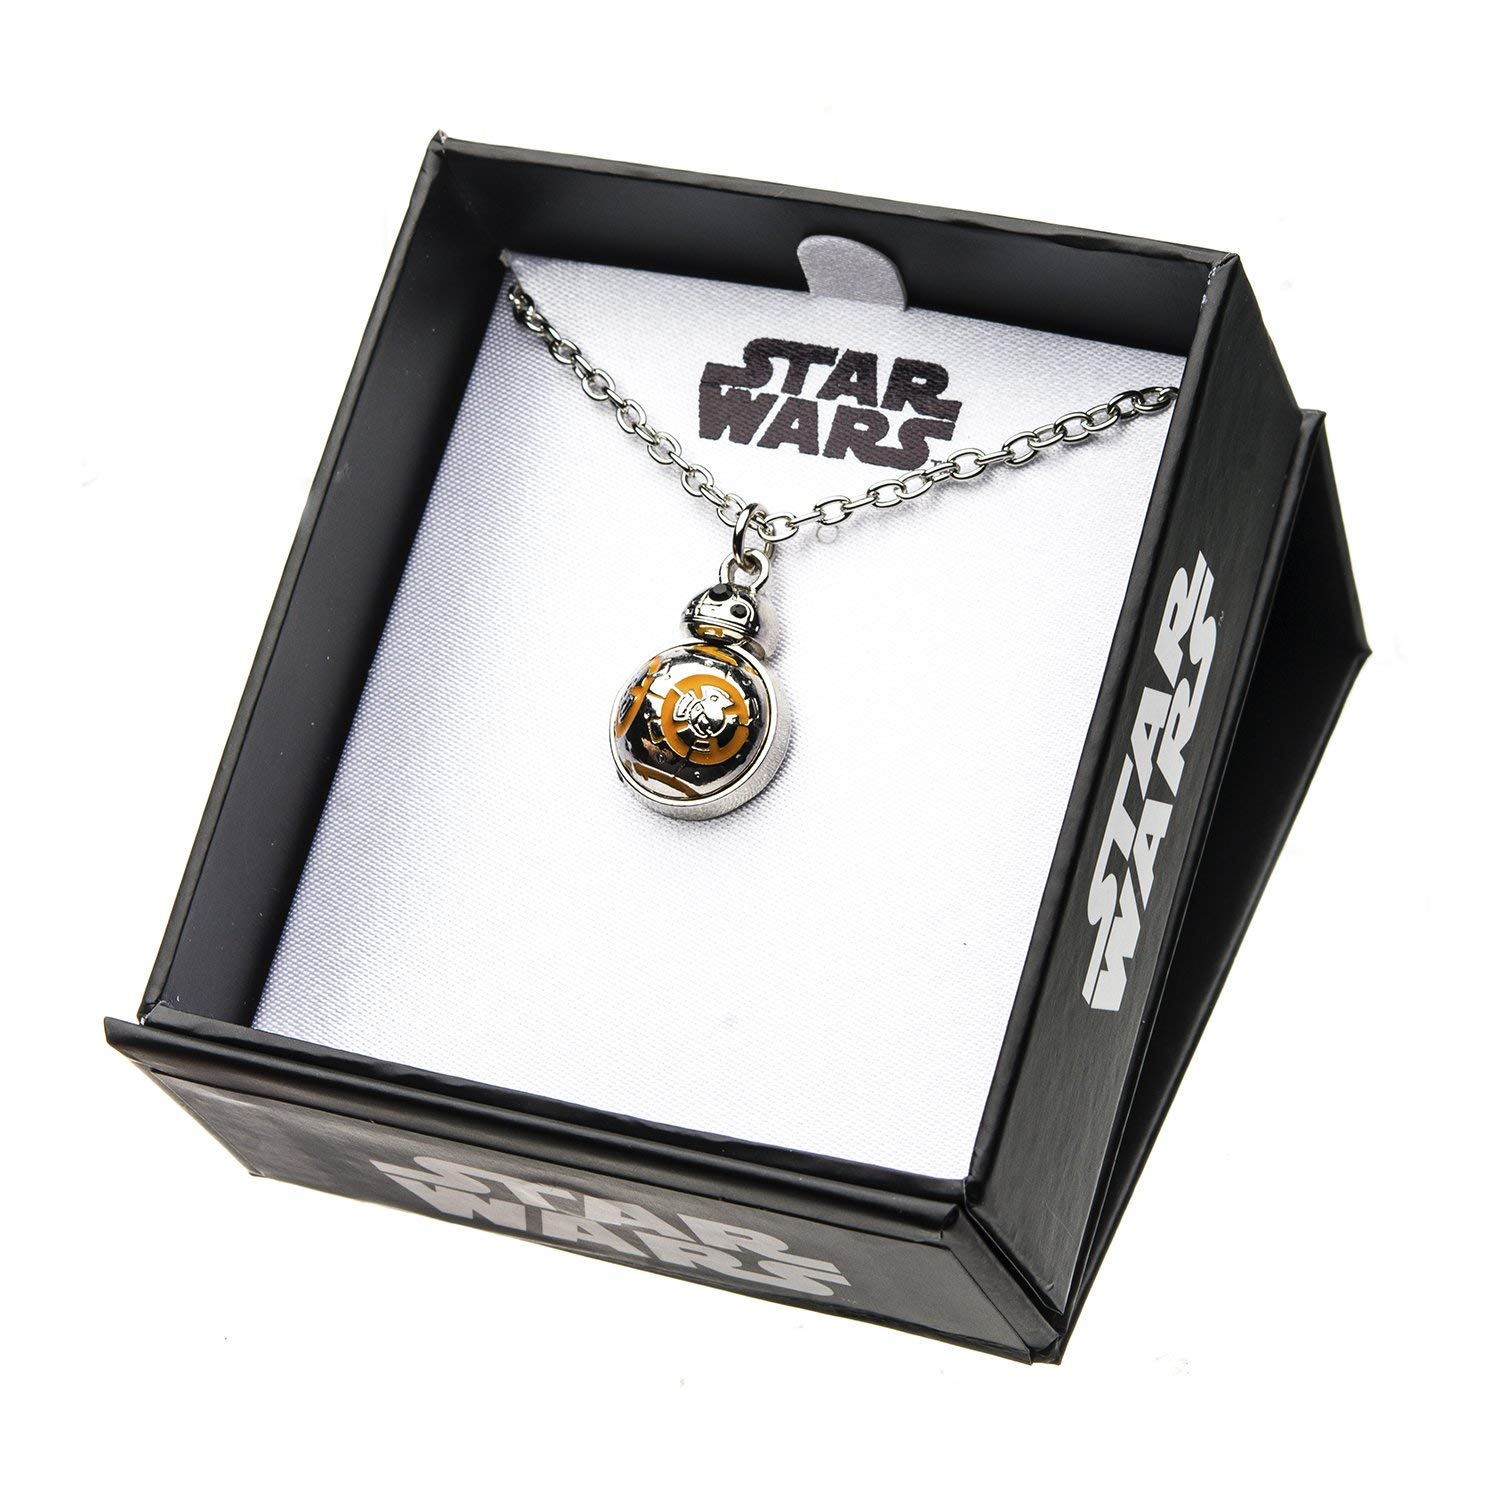 Body Vibe x Star Wars BB-8 Flat Backed Necklace on Amazon